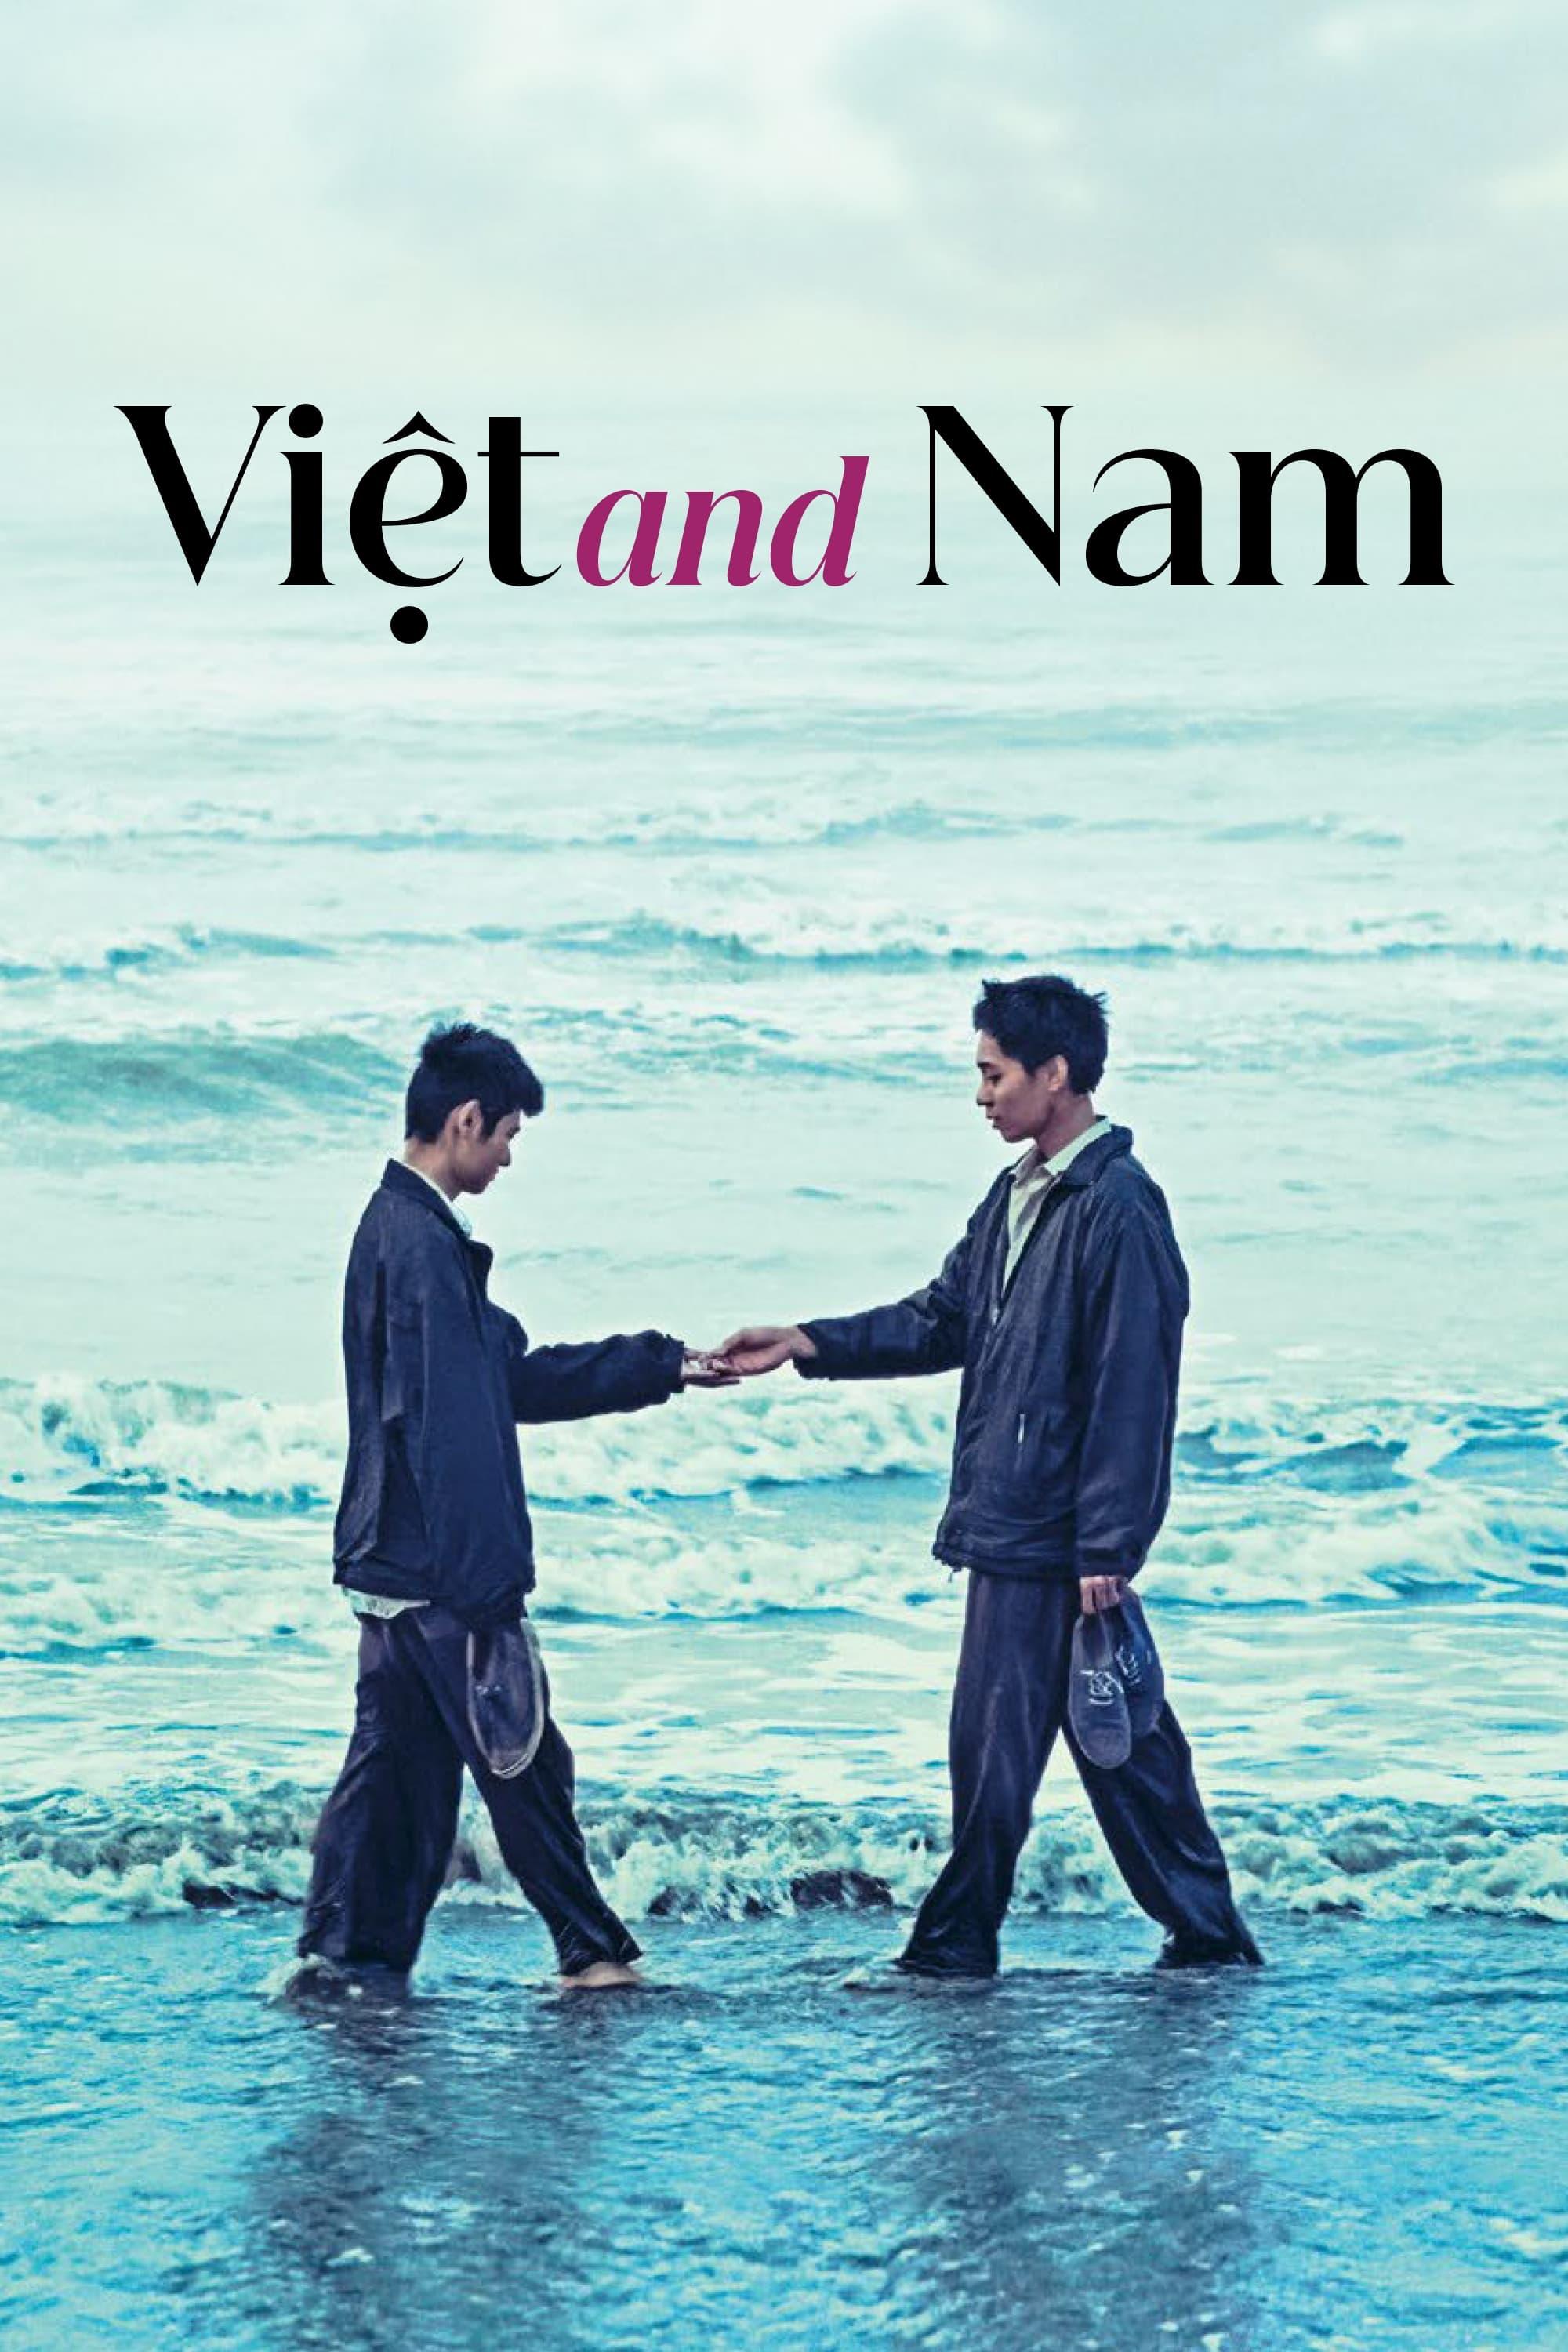 Viet and Nam poster